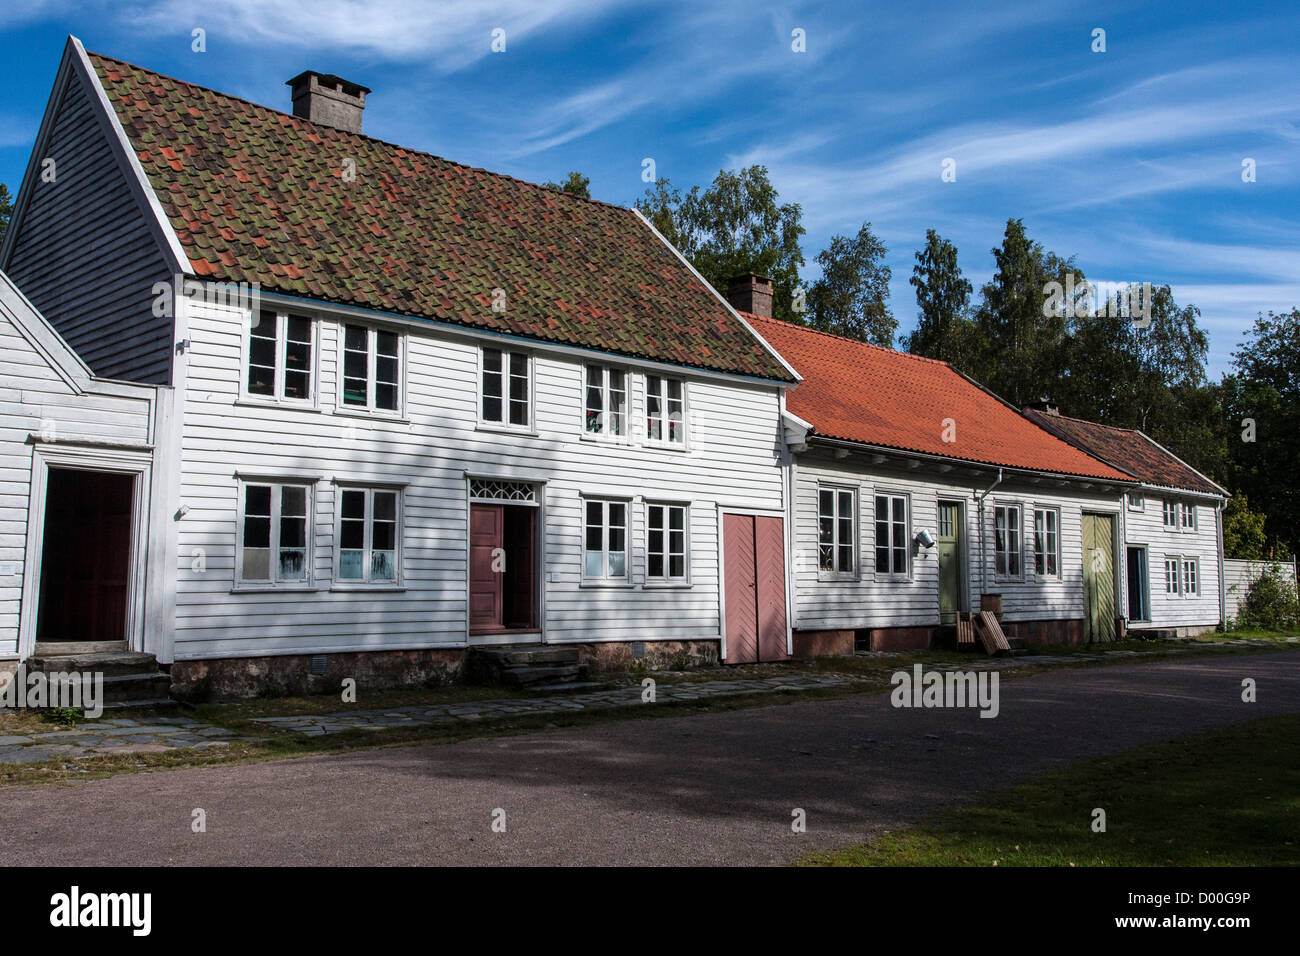 Bygaden Street at Vest-Agder Museum Norway,  rebuilt from Kristiansand Stock Photo